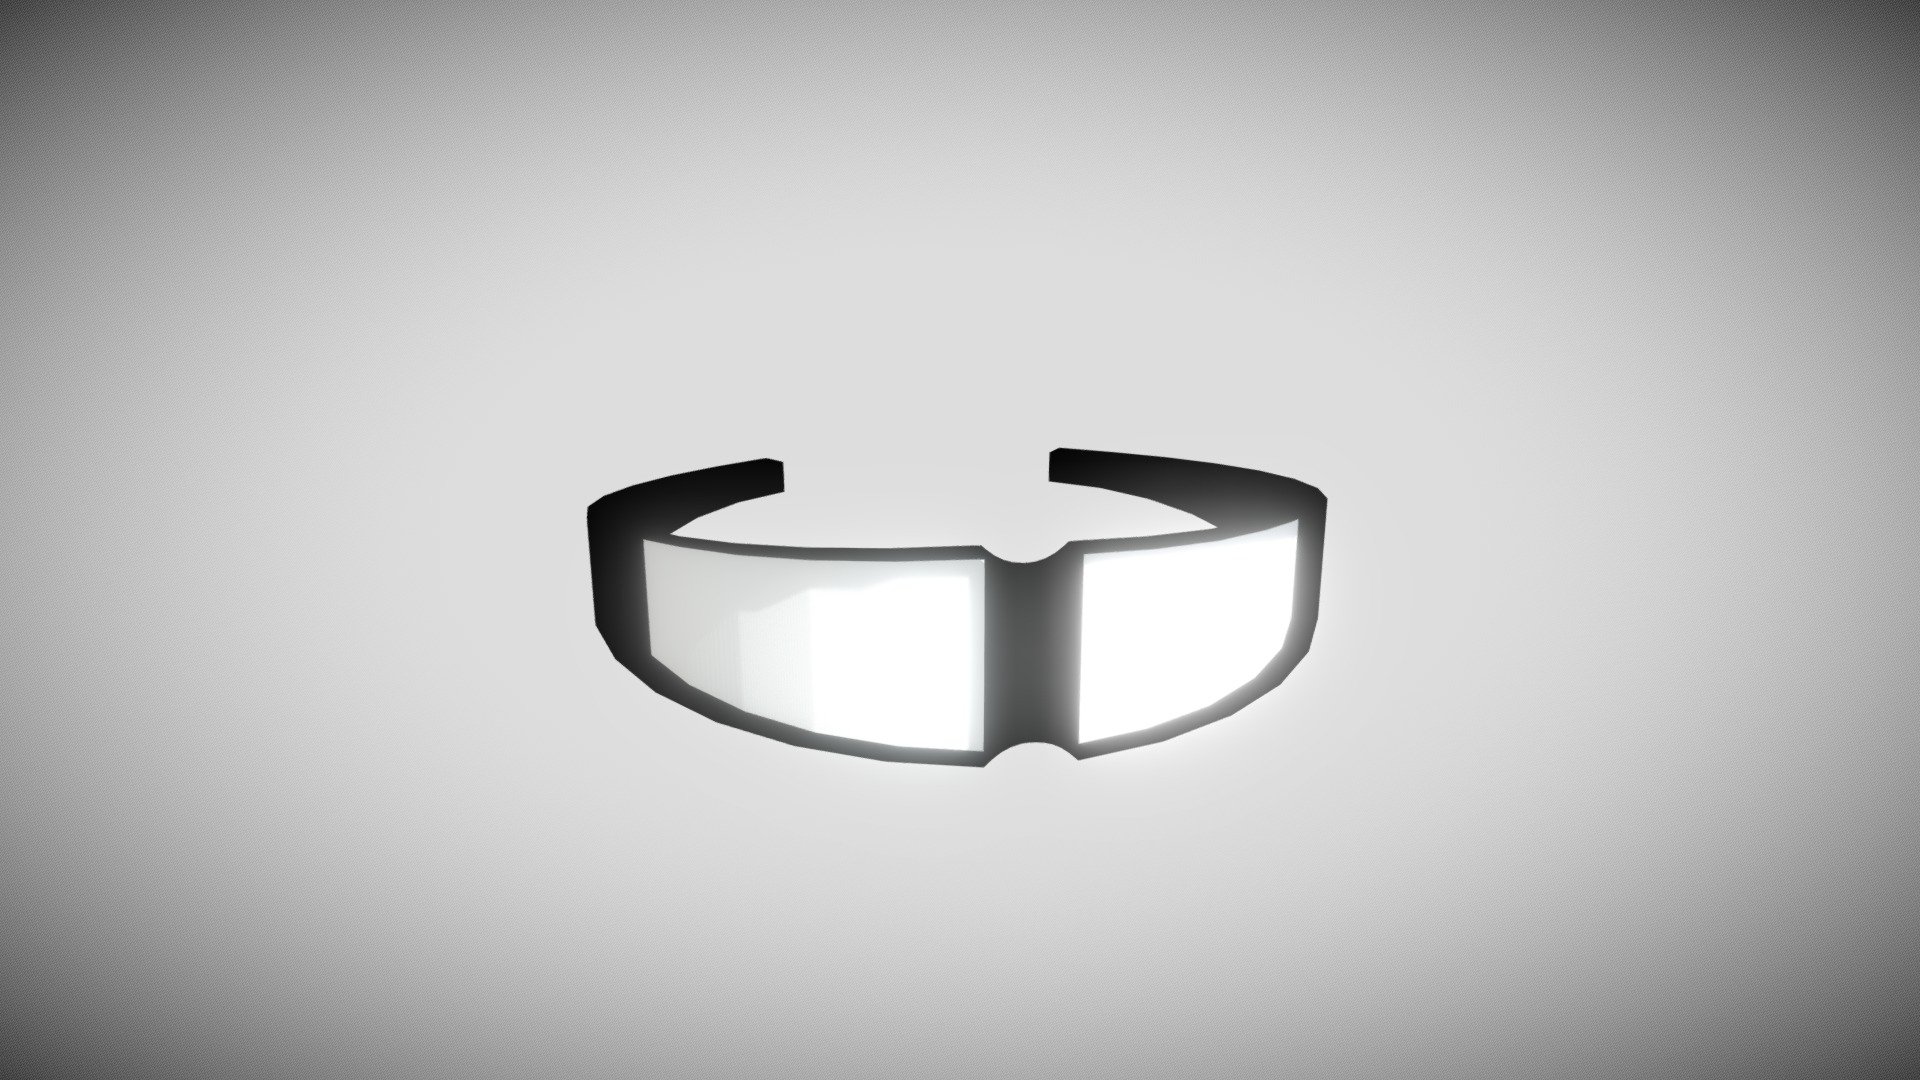 FUTURISTIC GLASSES | Super Sun glasses | Goggles | cool sun glasses
cool eye glass - FUTURISTIC GLASSES | Super Sun glasses | Goggles - Download Free 3D model by MR EXPERT (@Rahul.Kumar5) 3d model